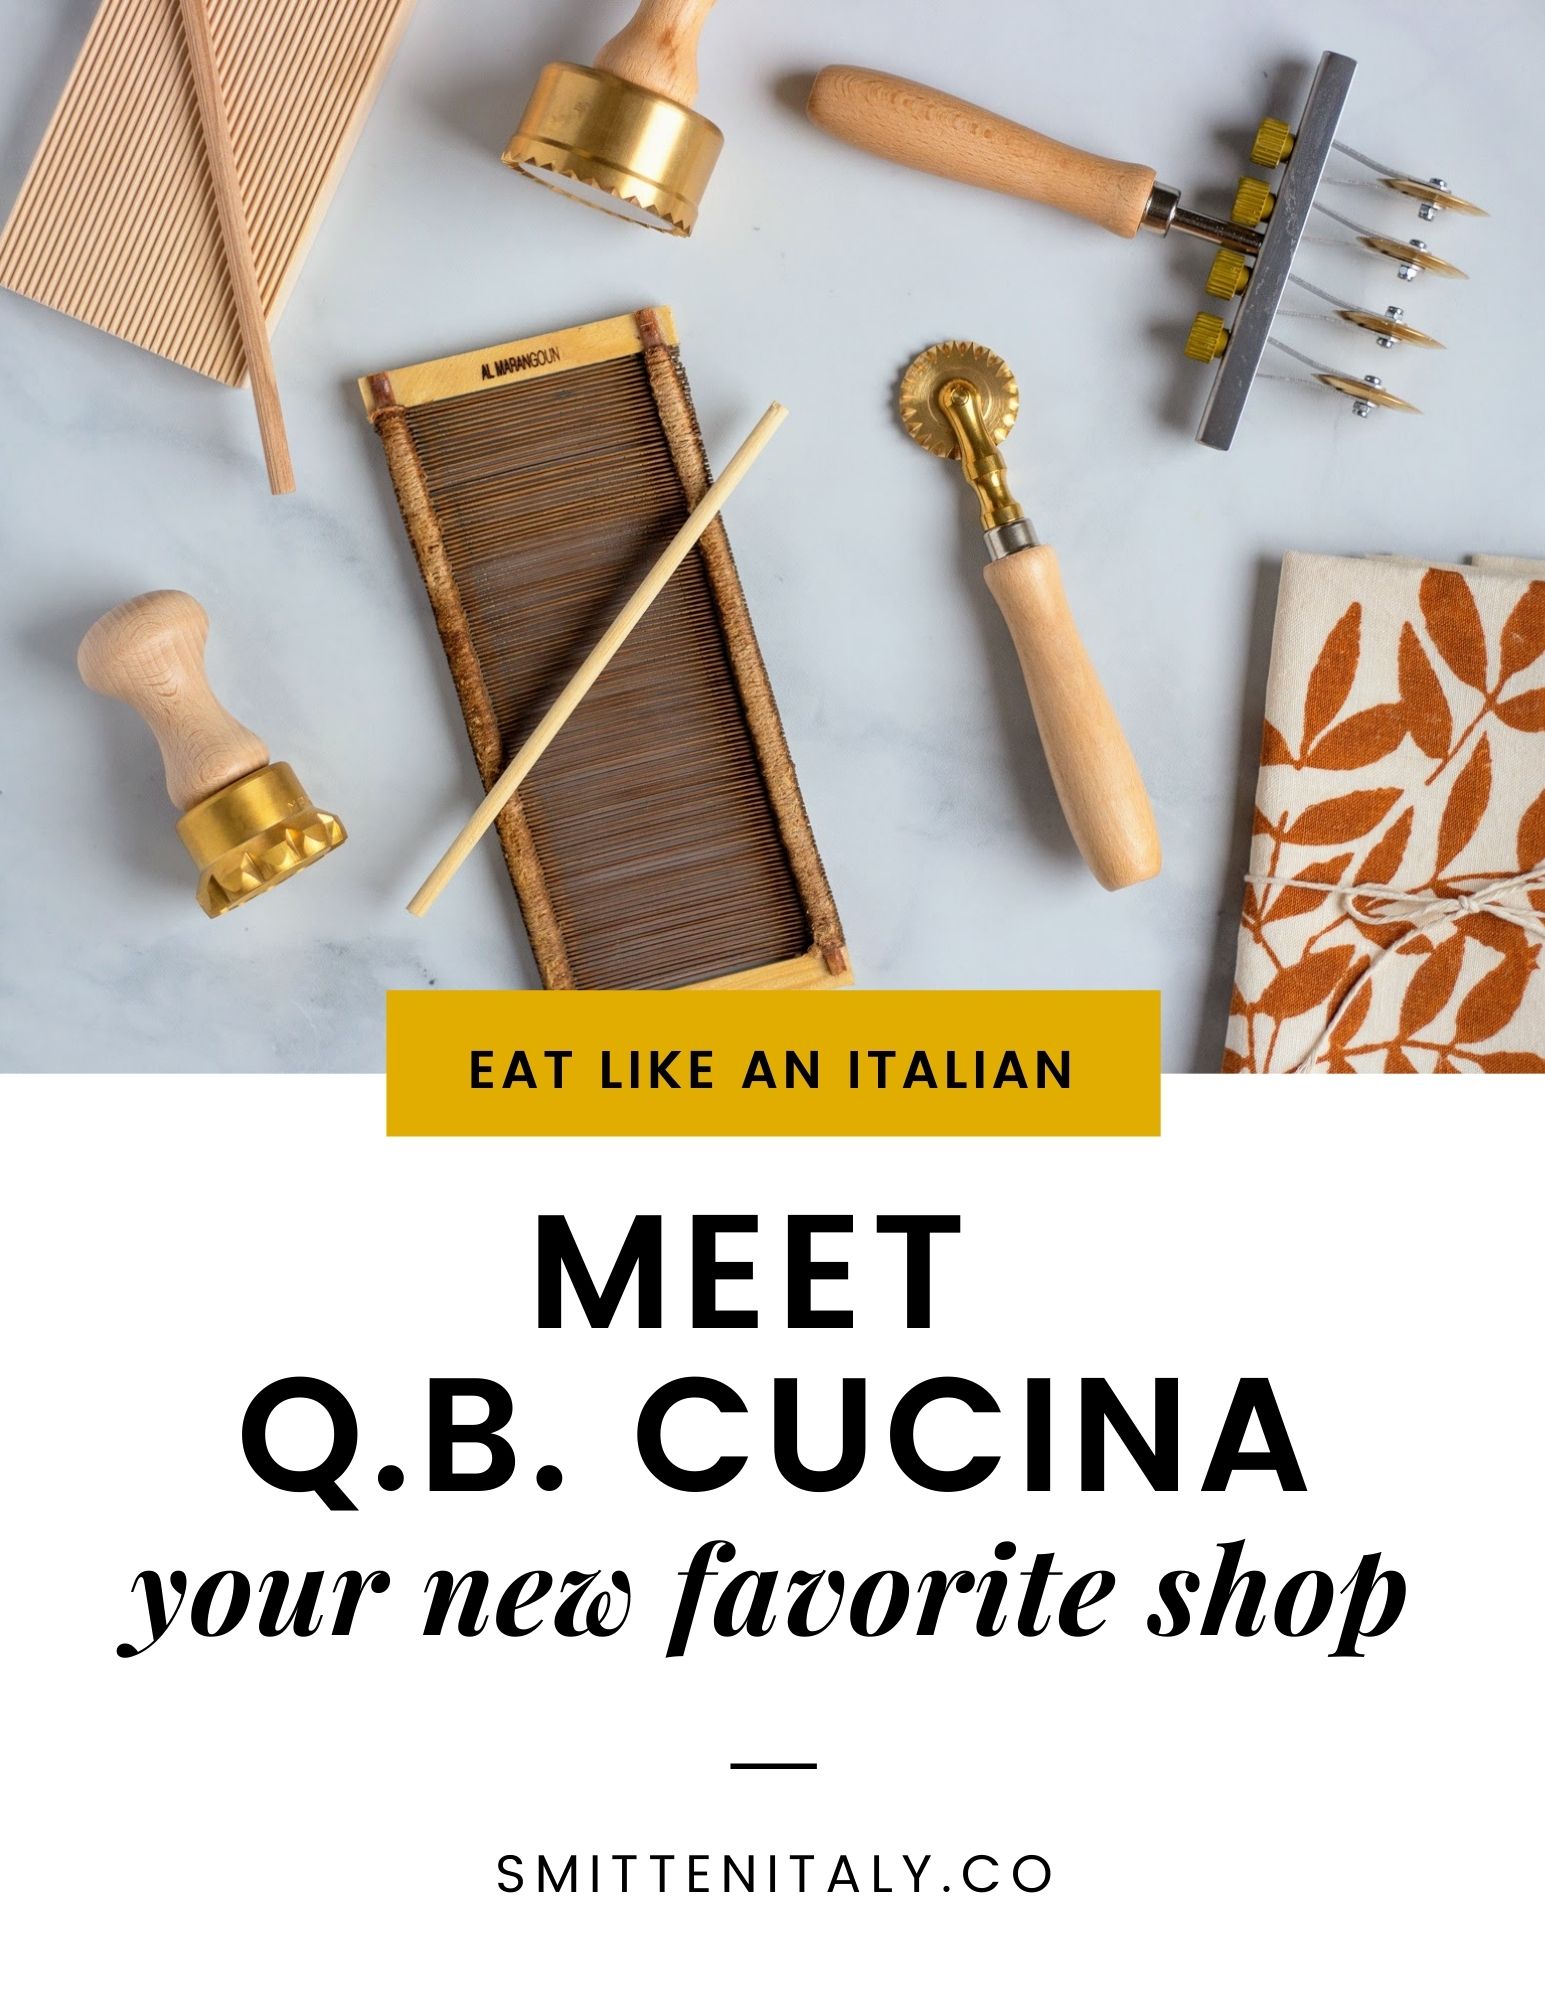 Meet q.b. cucina: your new favorite shop 10